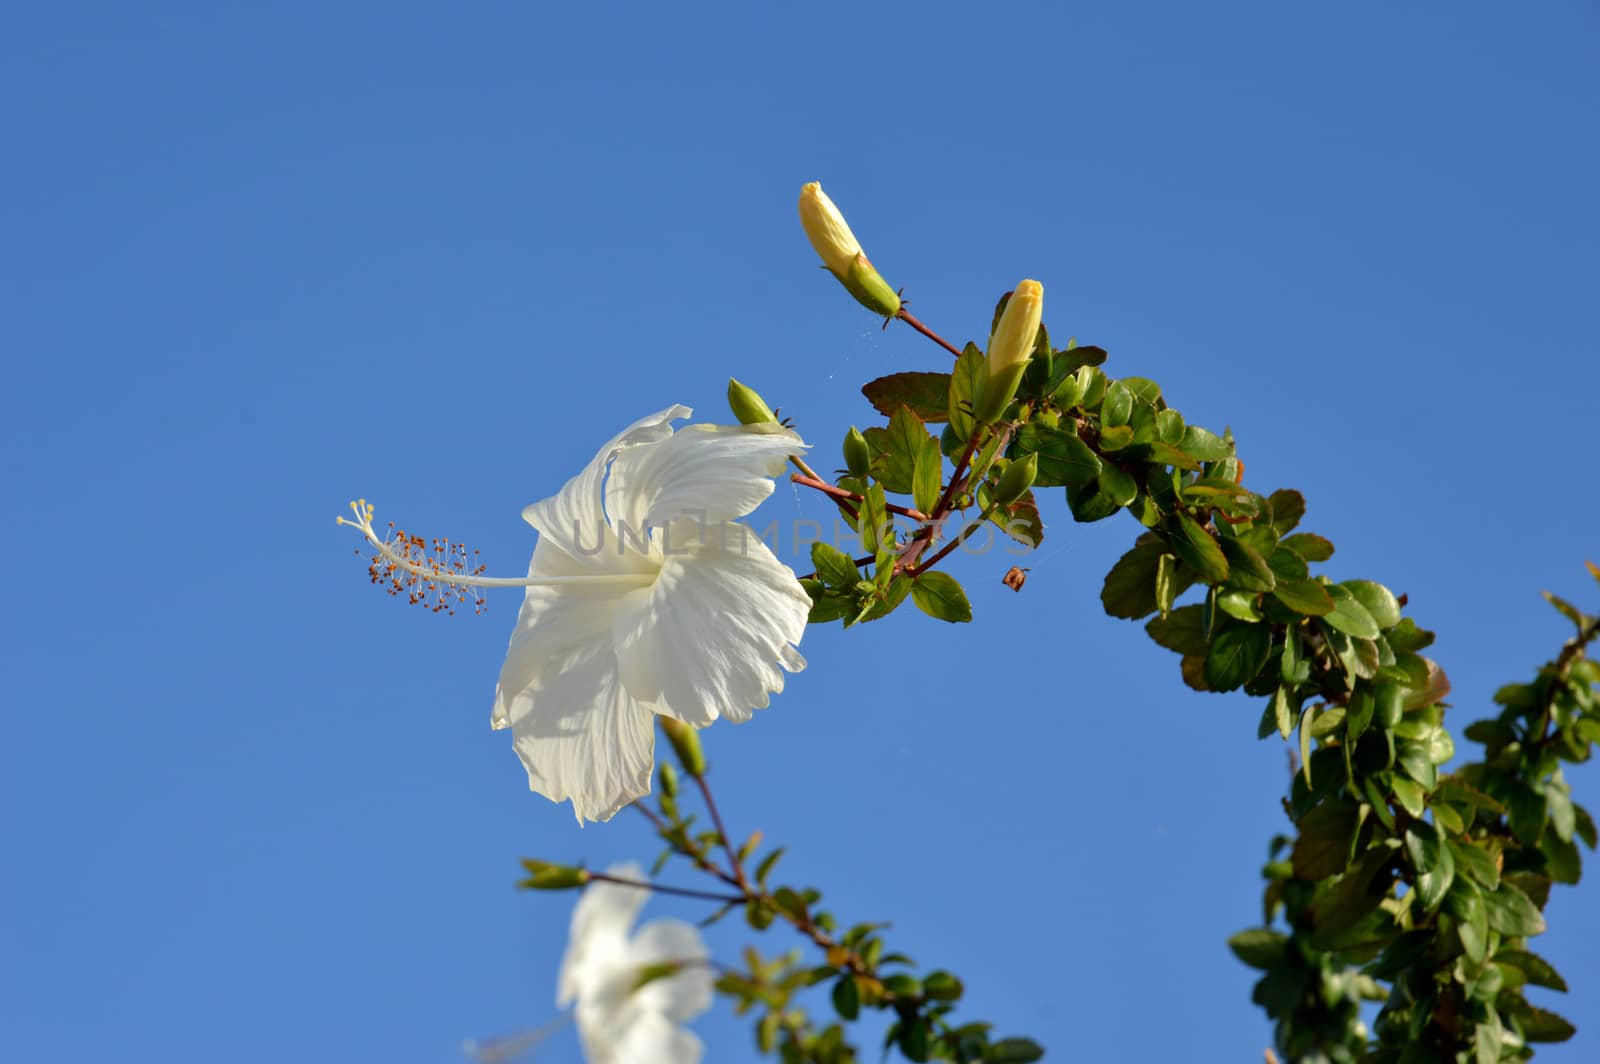 white hibiscus flower against blue sky